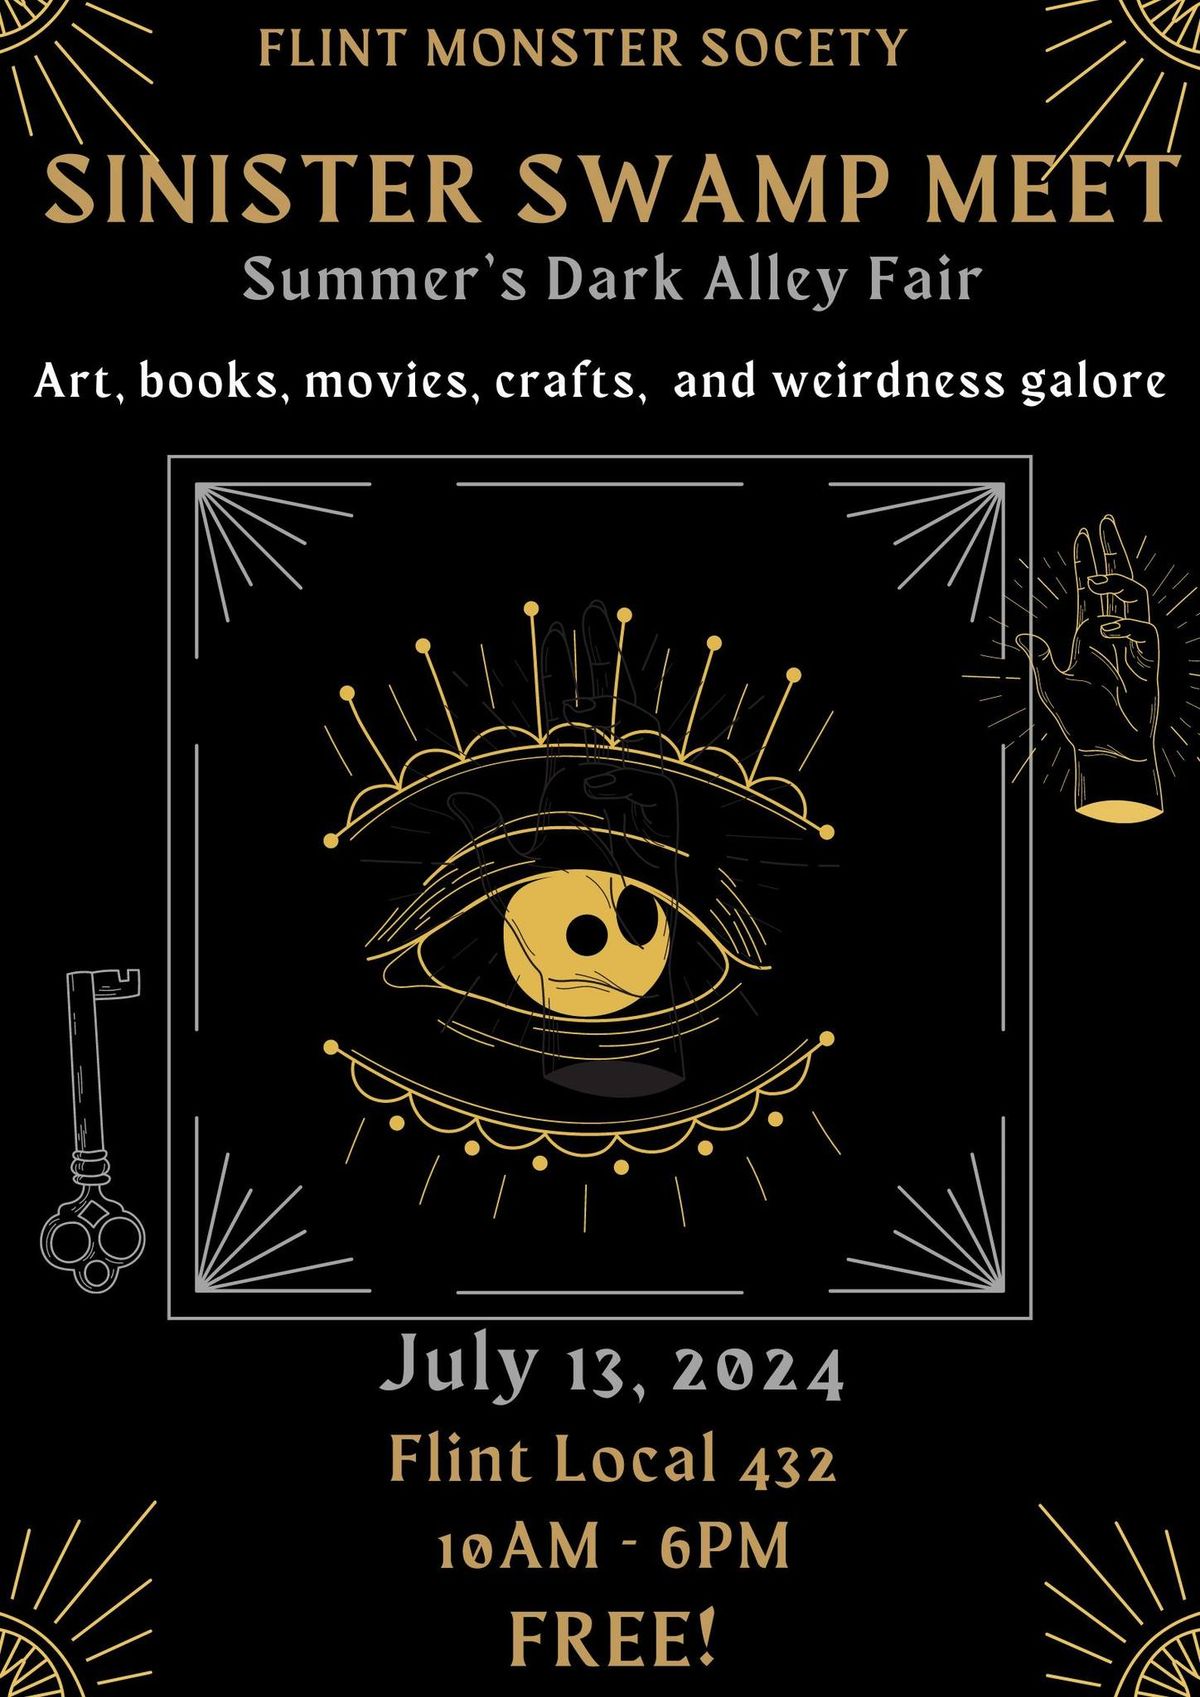 Sinister Swamp Meet - Summer's Dark Alley Fair